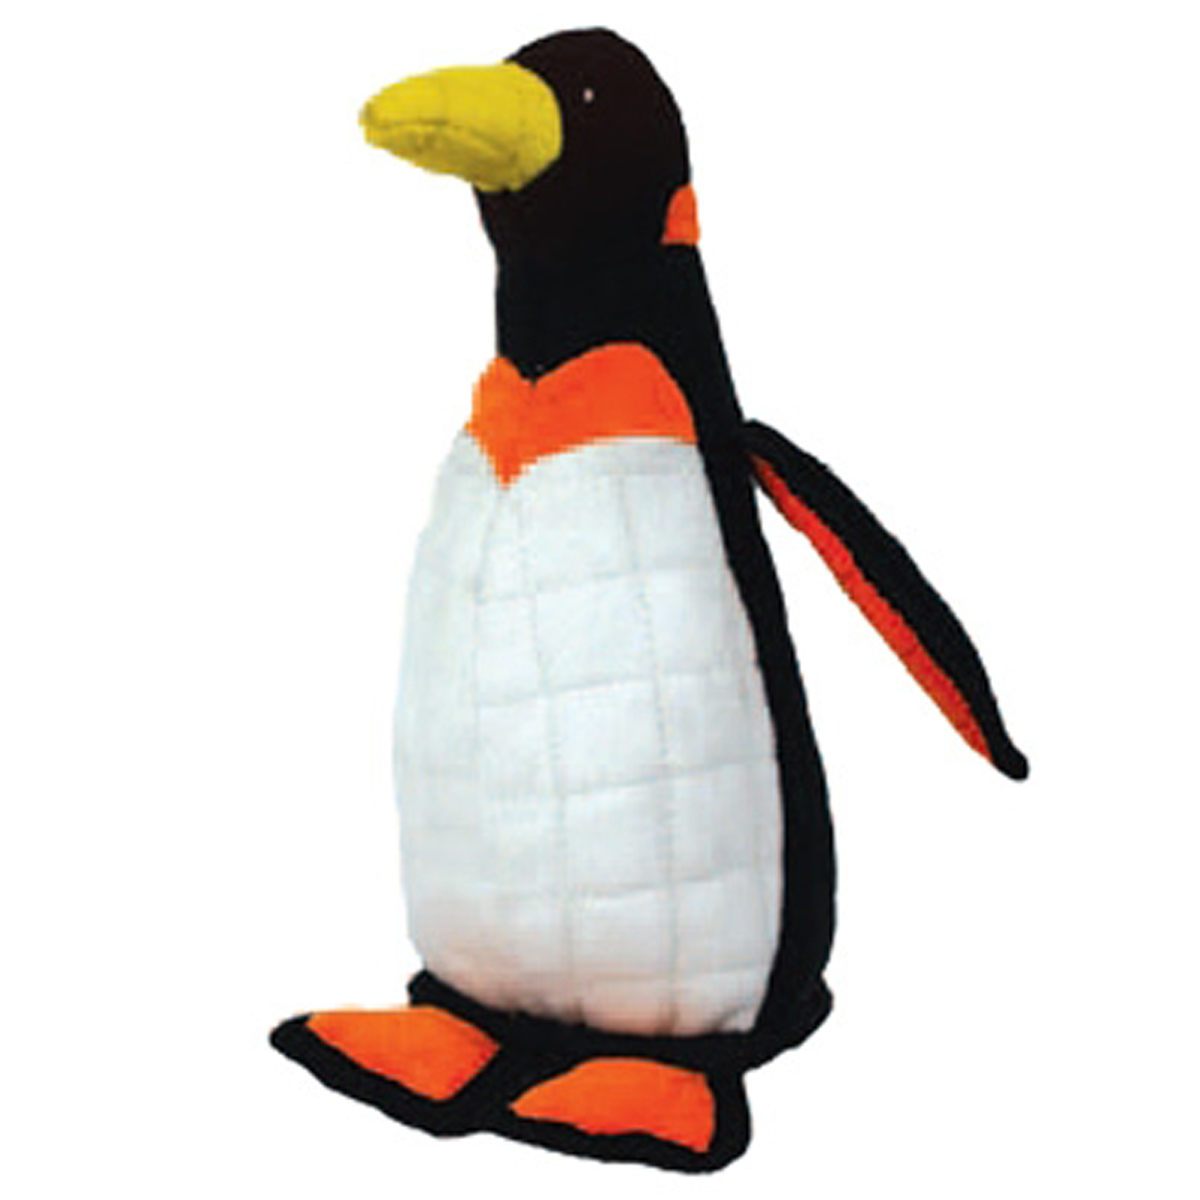 Tuffy Zoo Series Dog Toy - Peabody the Penguin